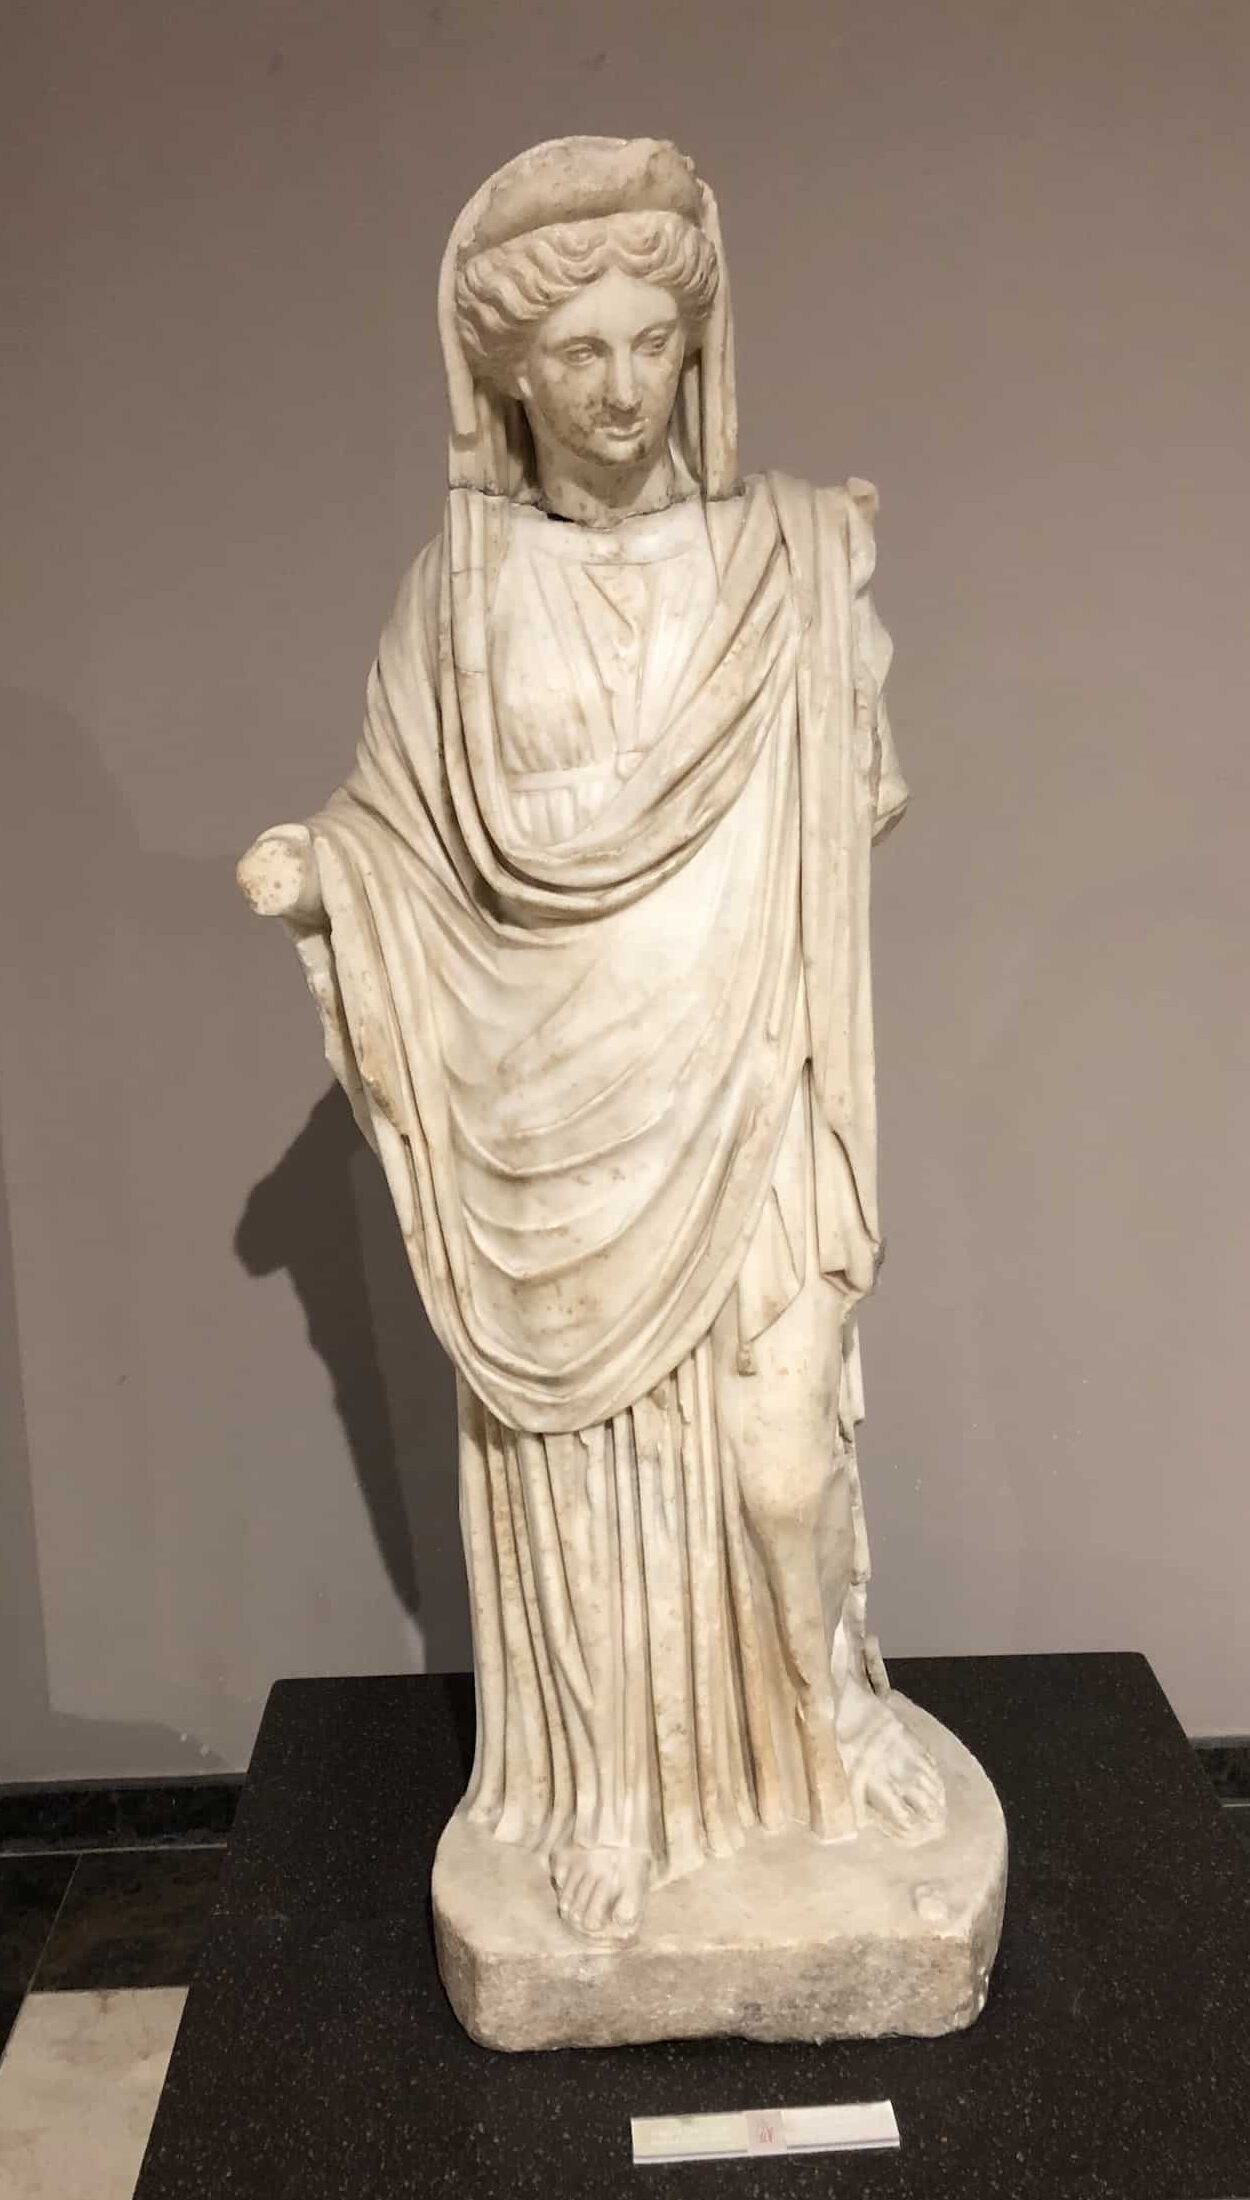 Statue at the ETİ Archaeology Museum in Eskişehir, Turkey